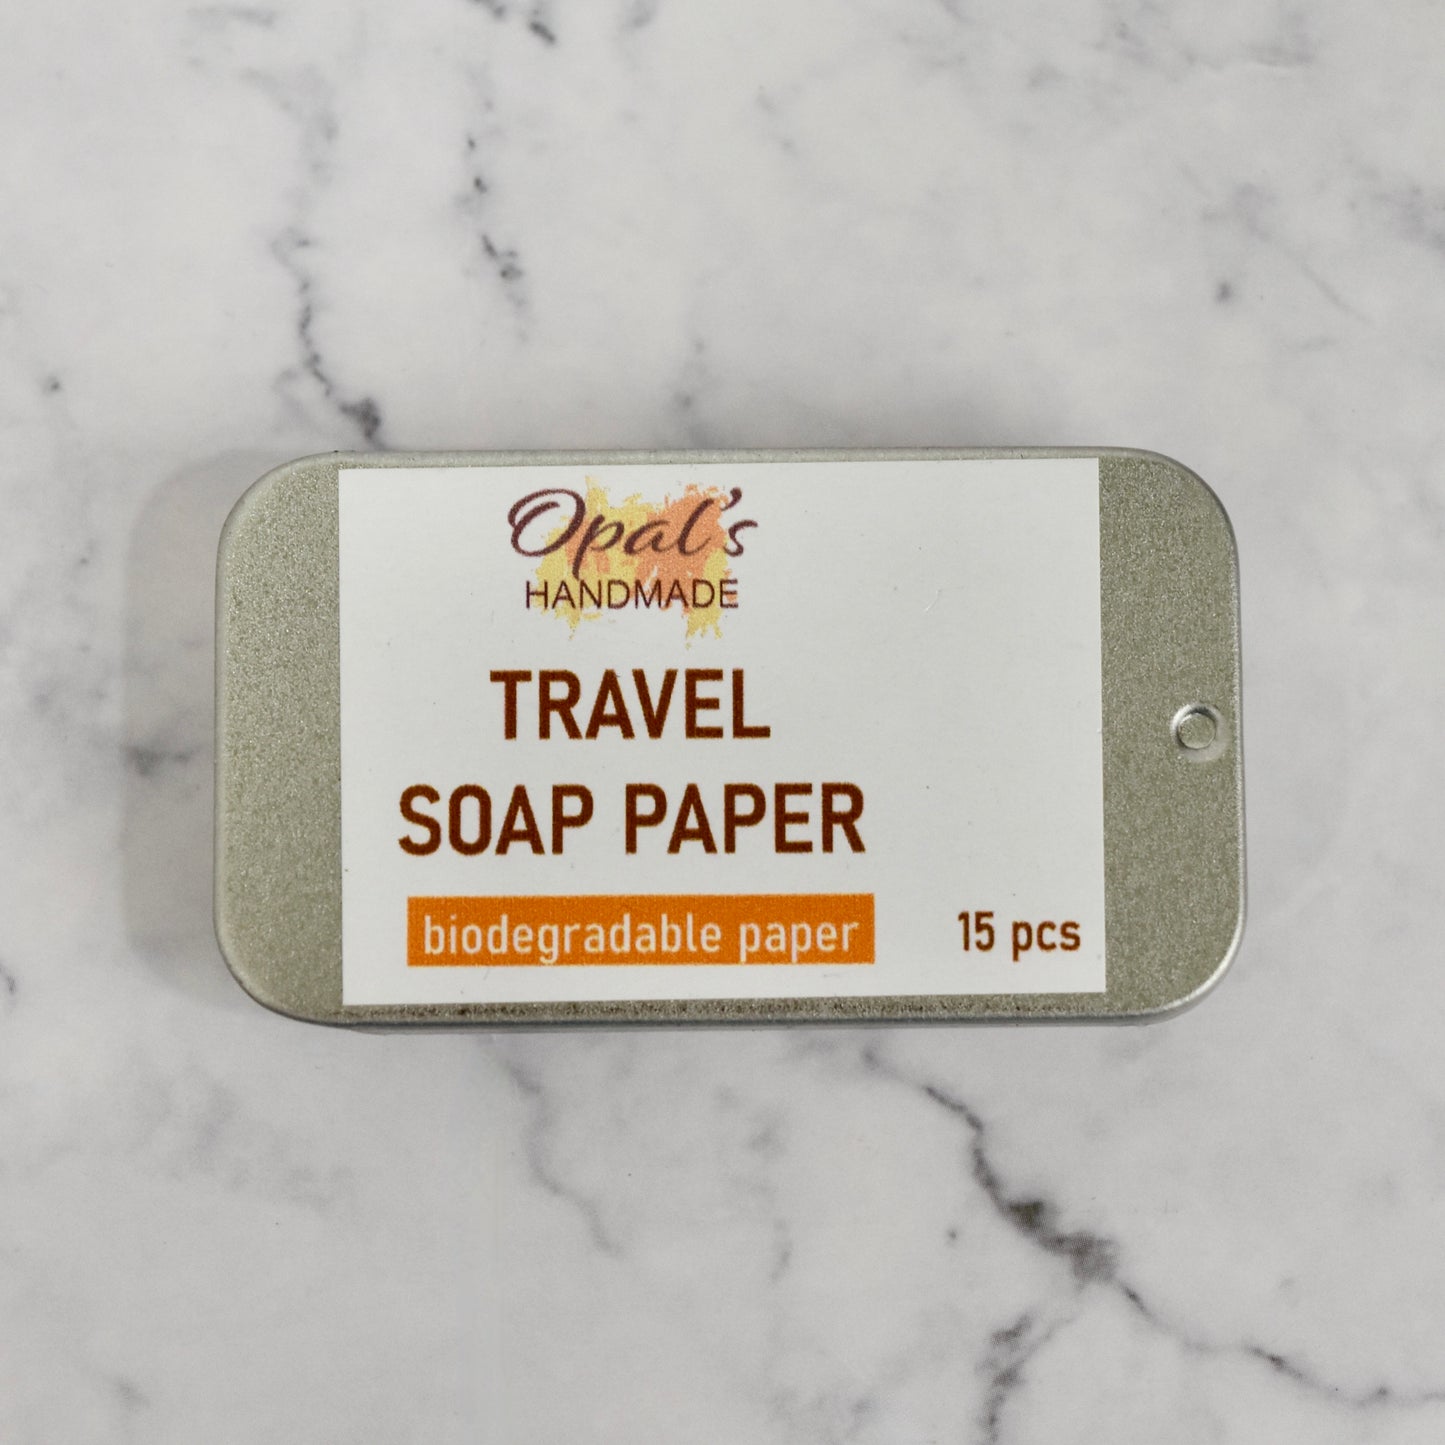 Travel Soap Paper